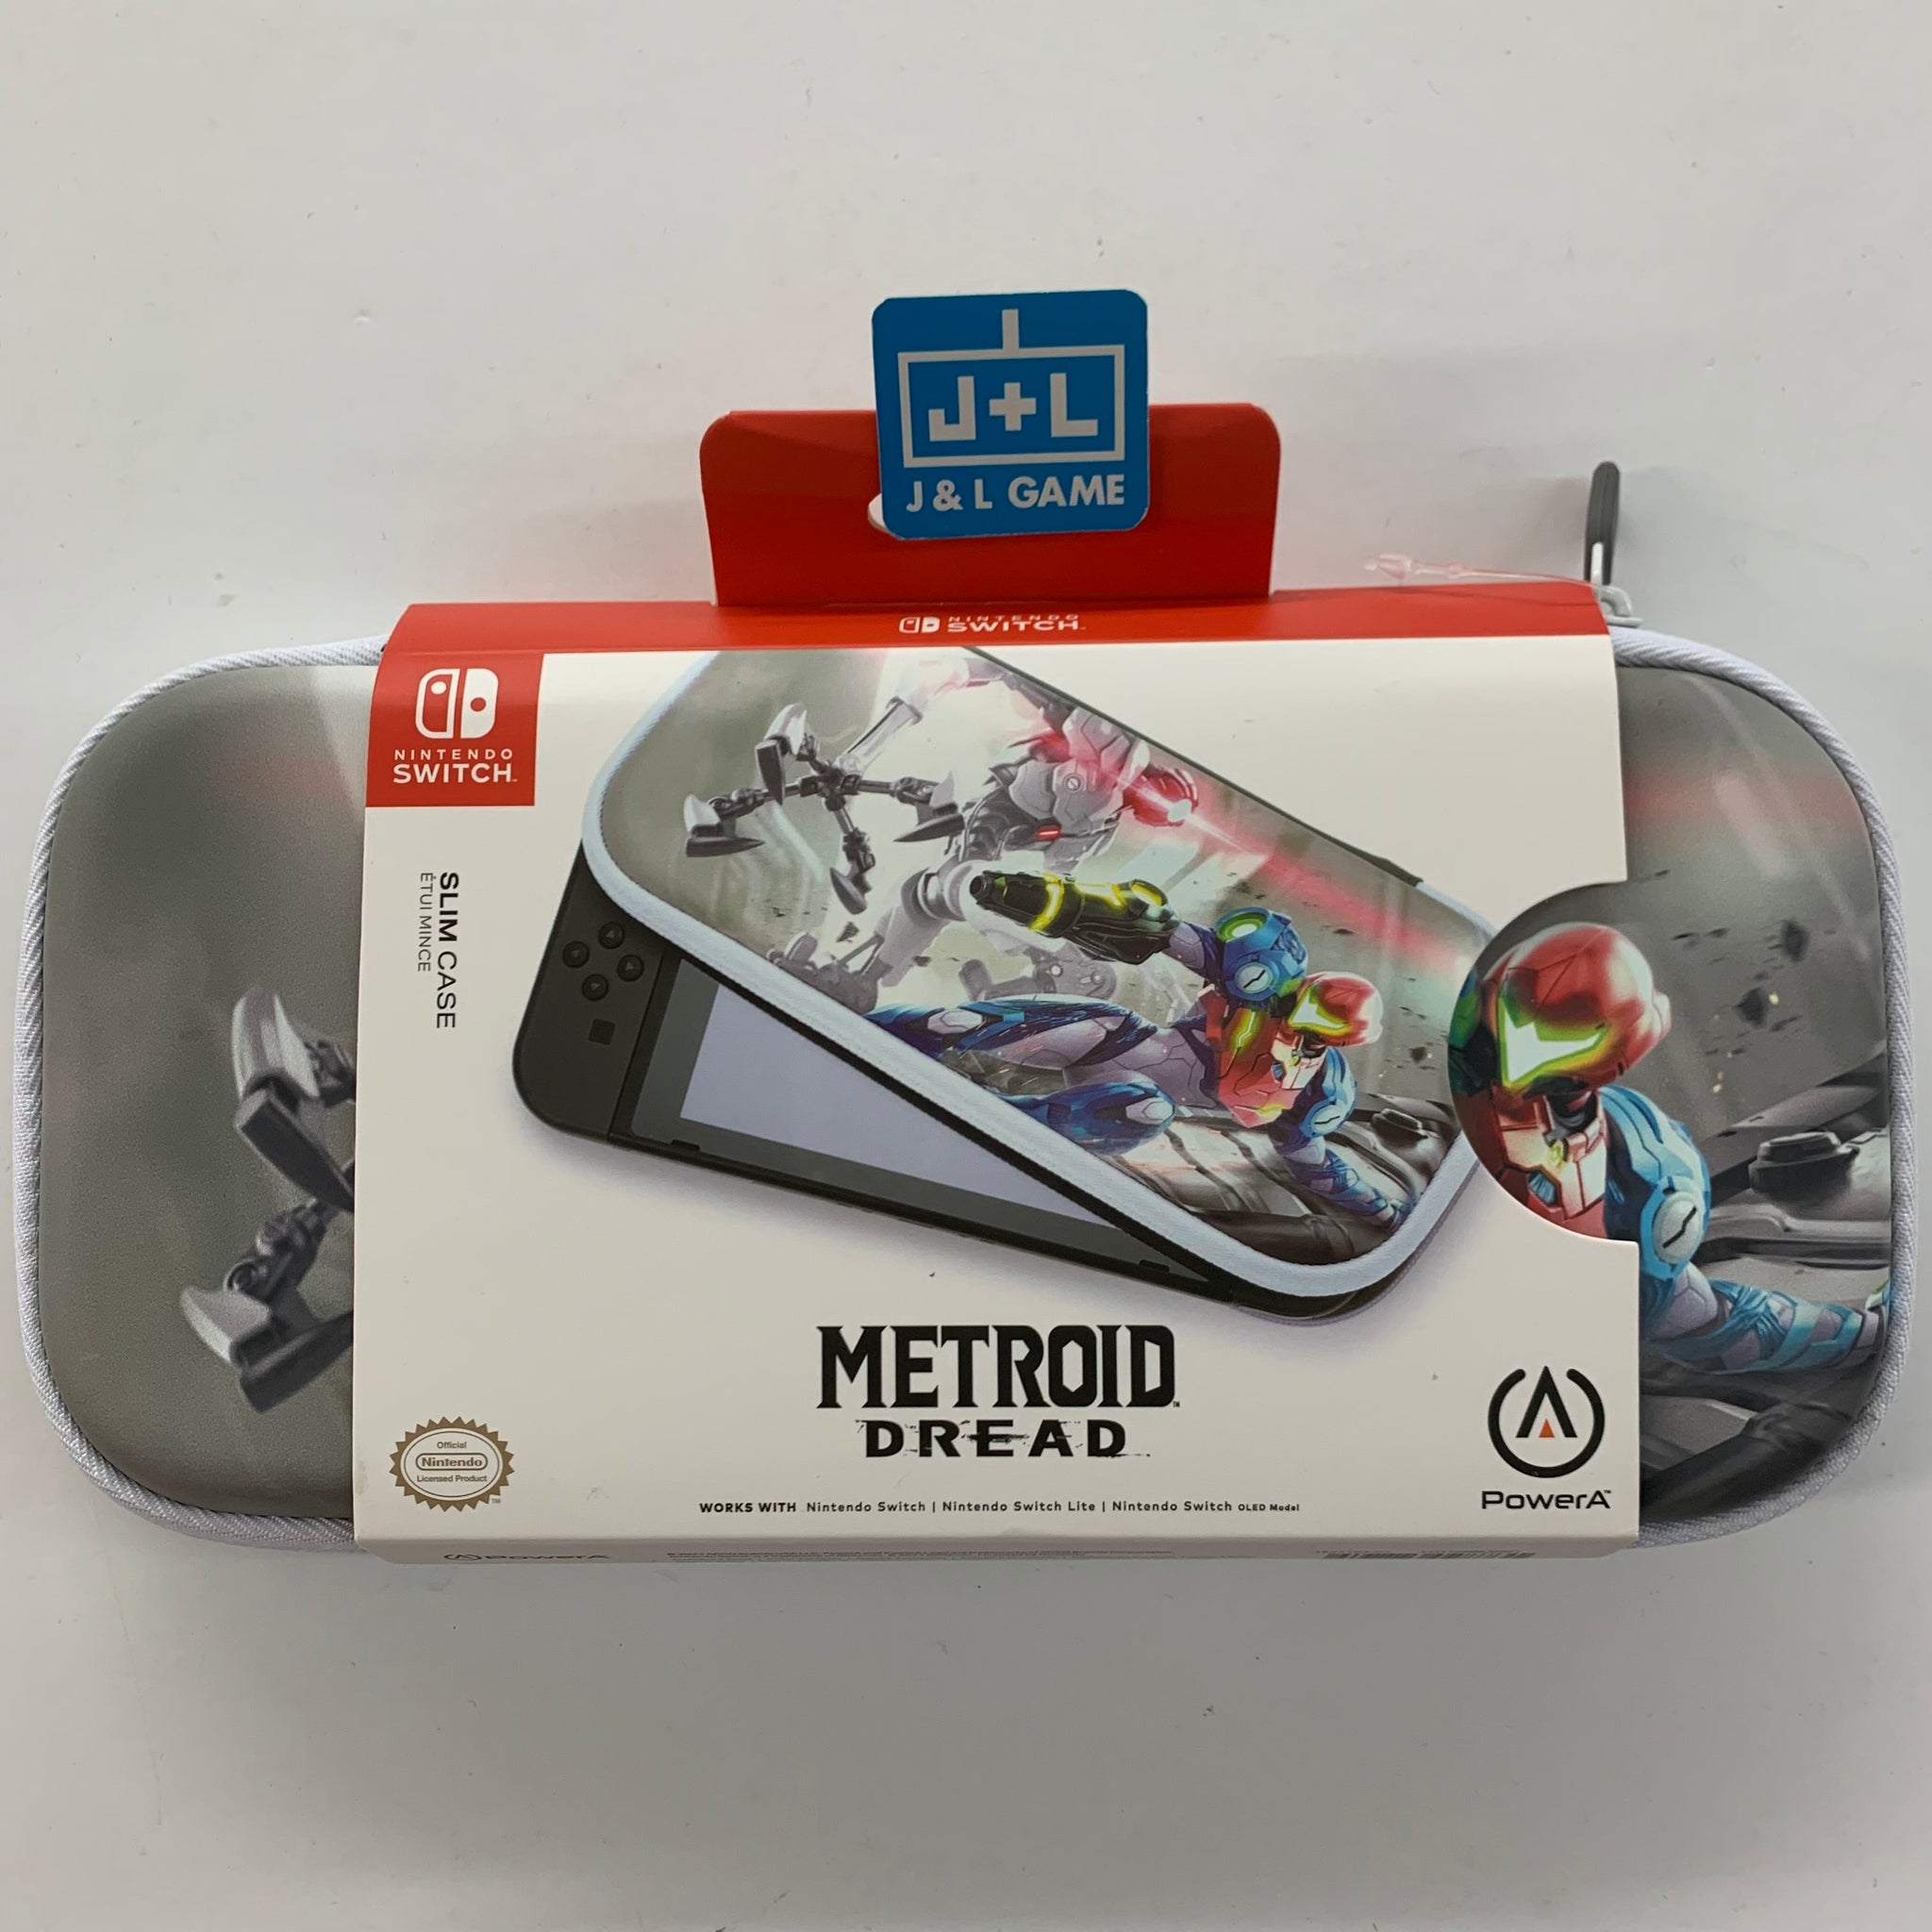 PowerA - Slim Case for Nintendo Switch - OLED Model, Nintendo